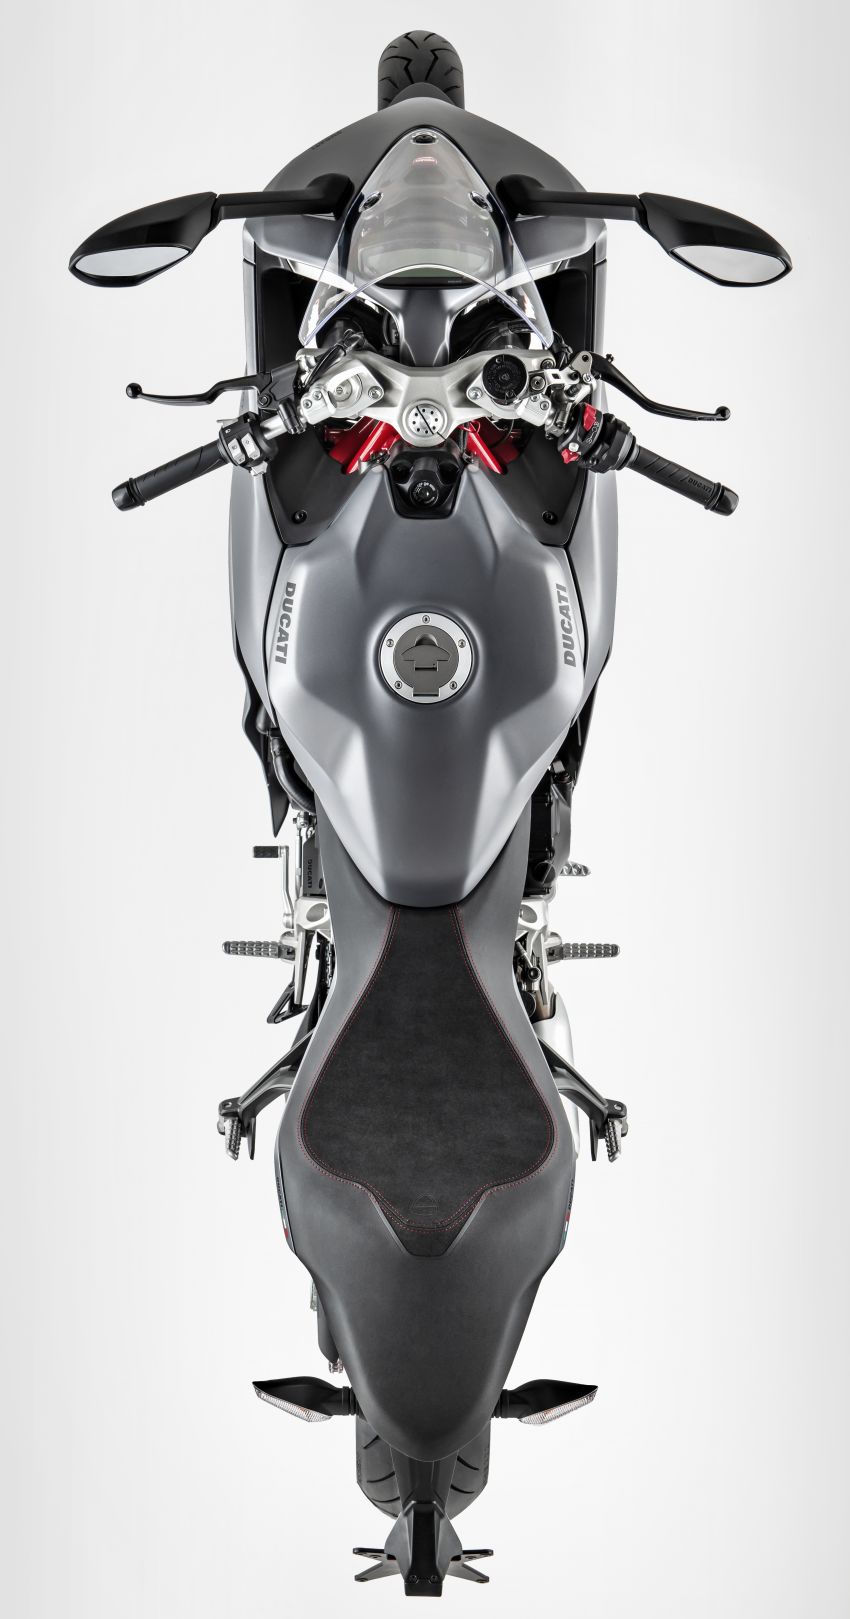 2019 Ducati SuperSport to come in Titanium Grey 830191